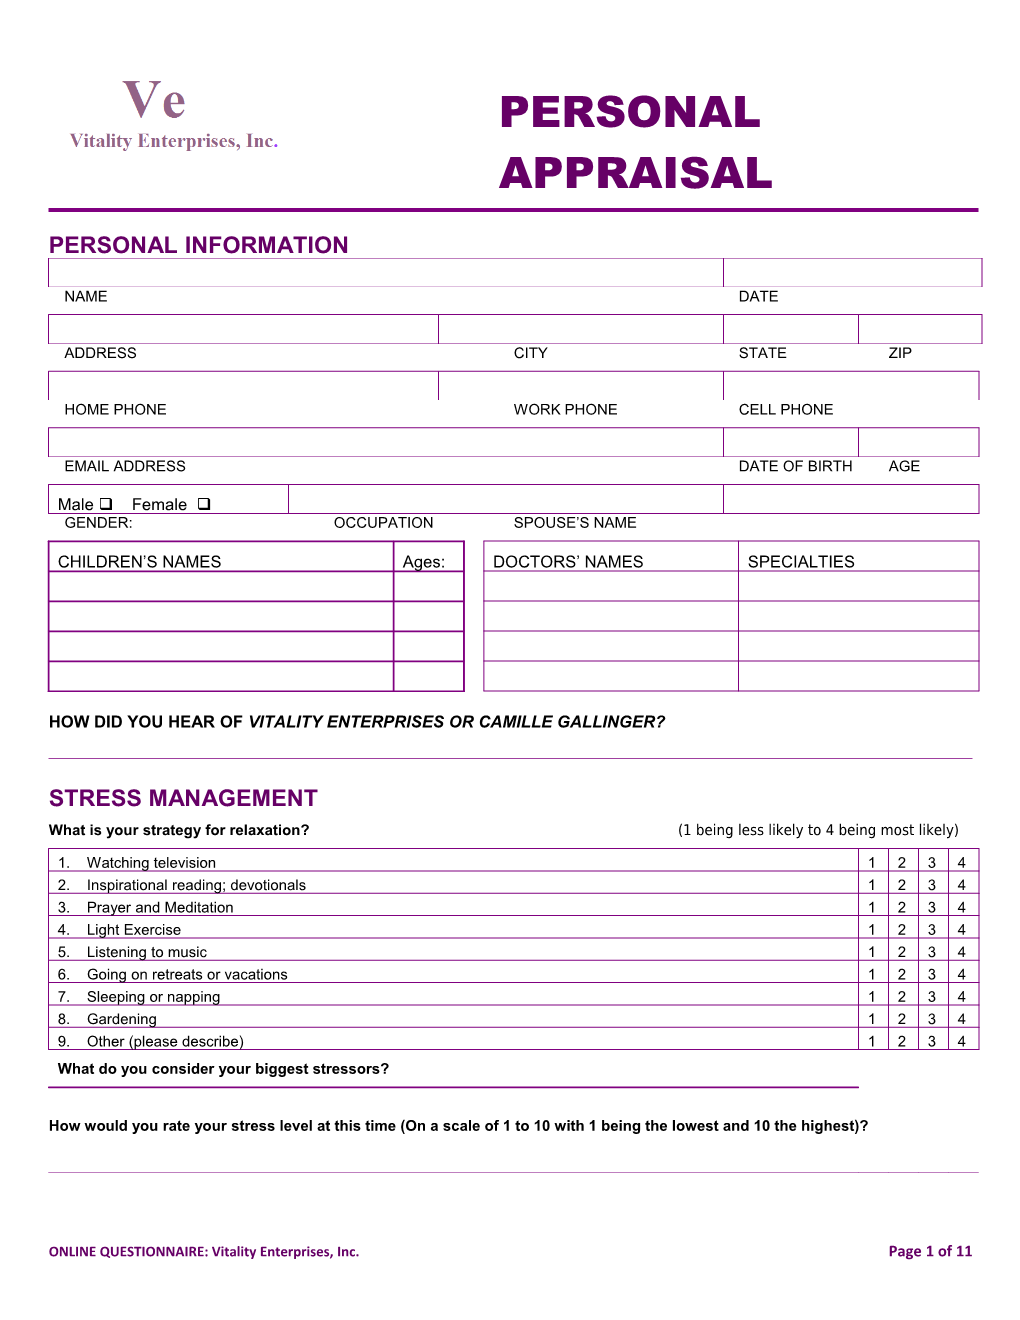 Personal Appraisal